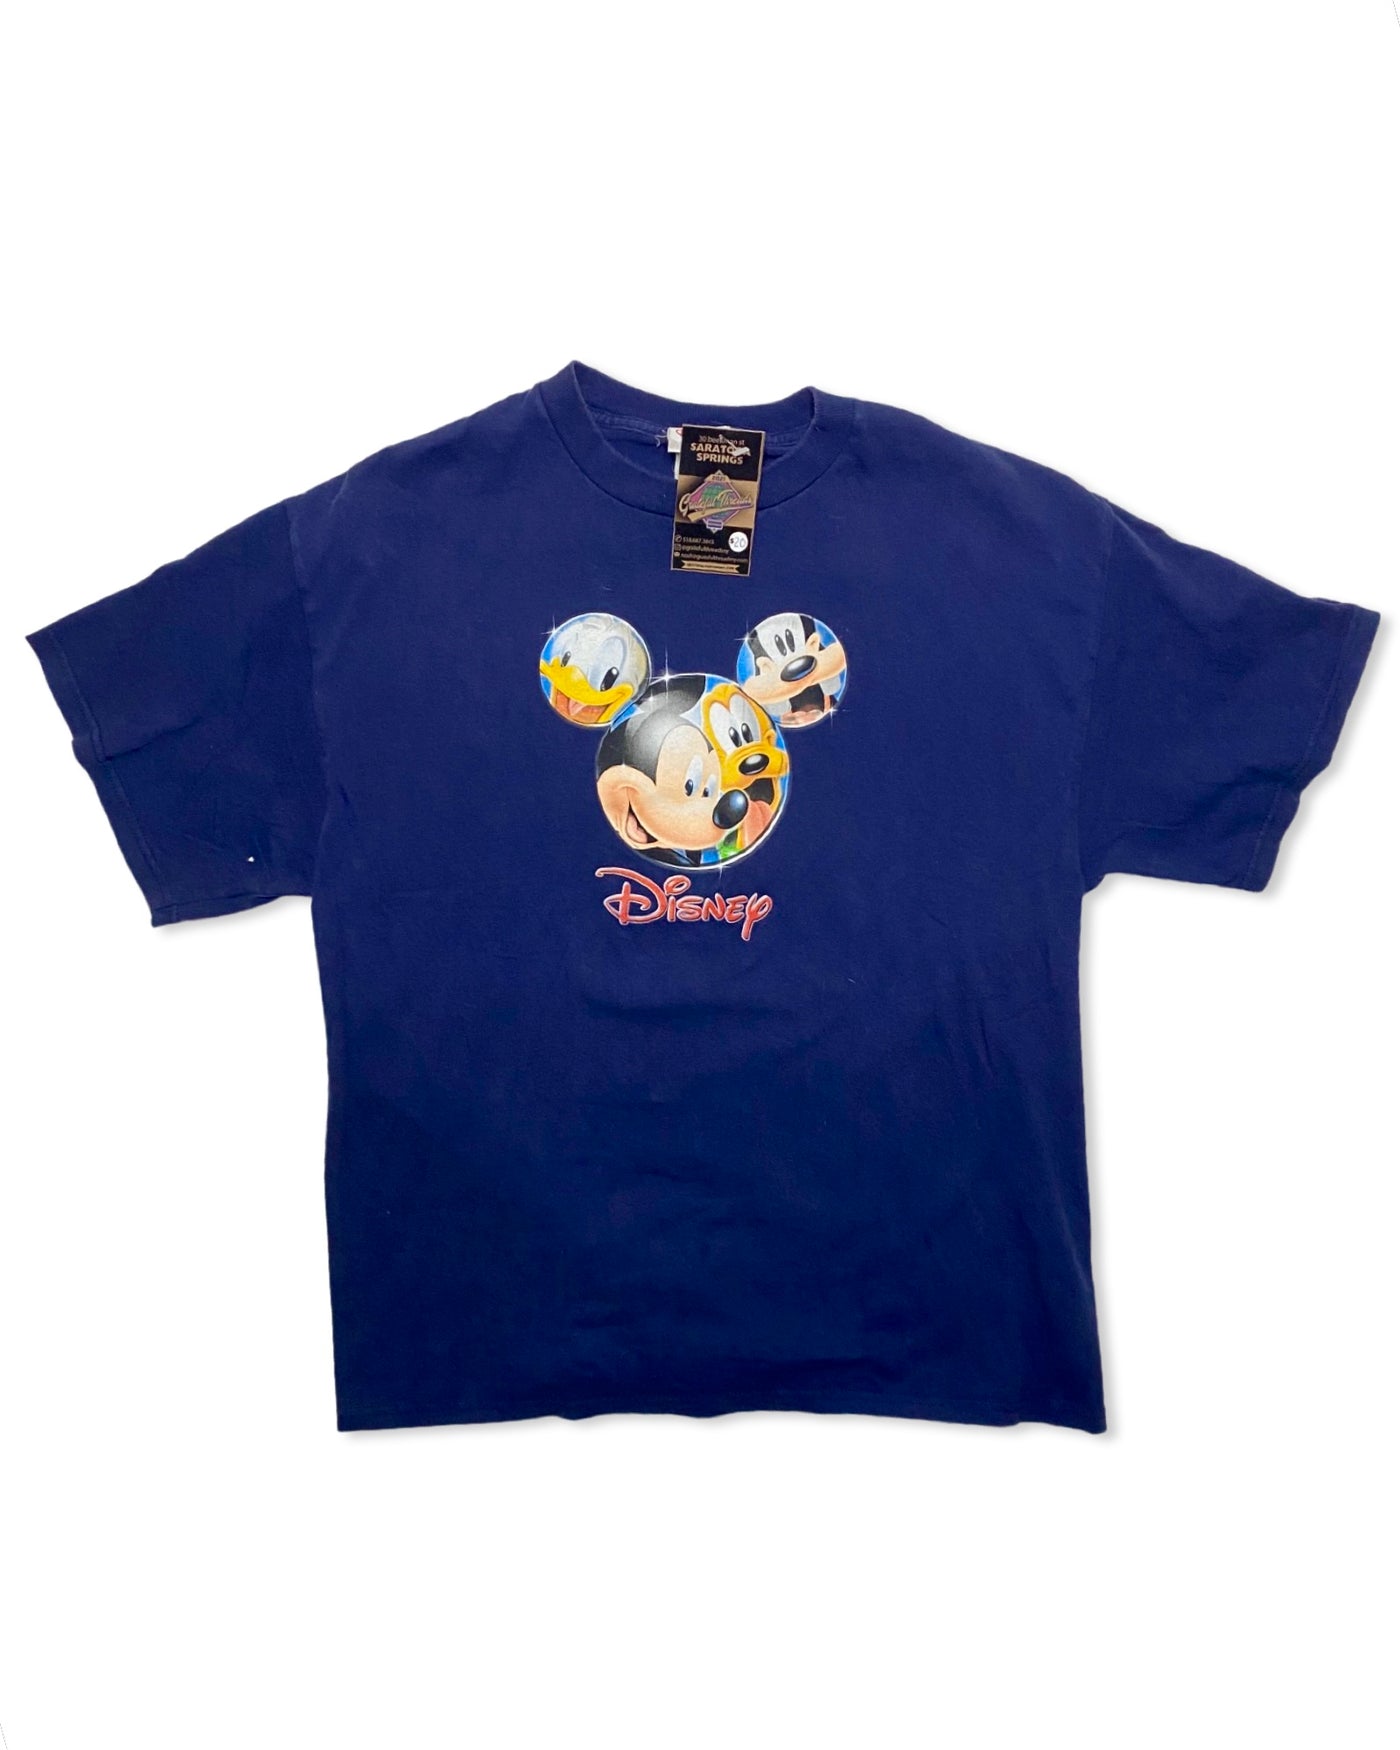 Vintage 90s Disney Graphic T-Shirt